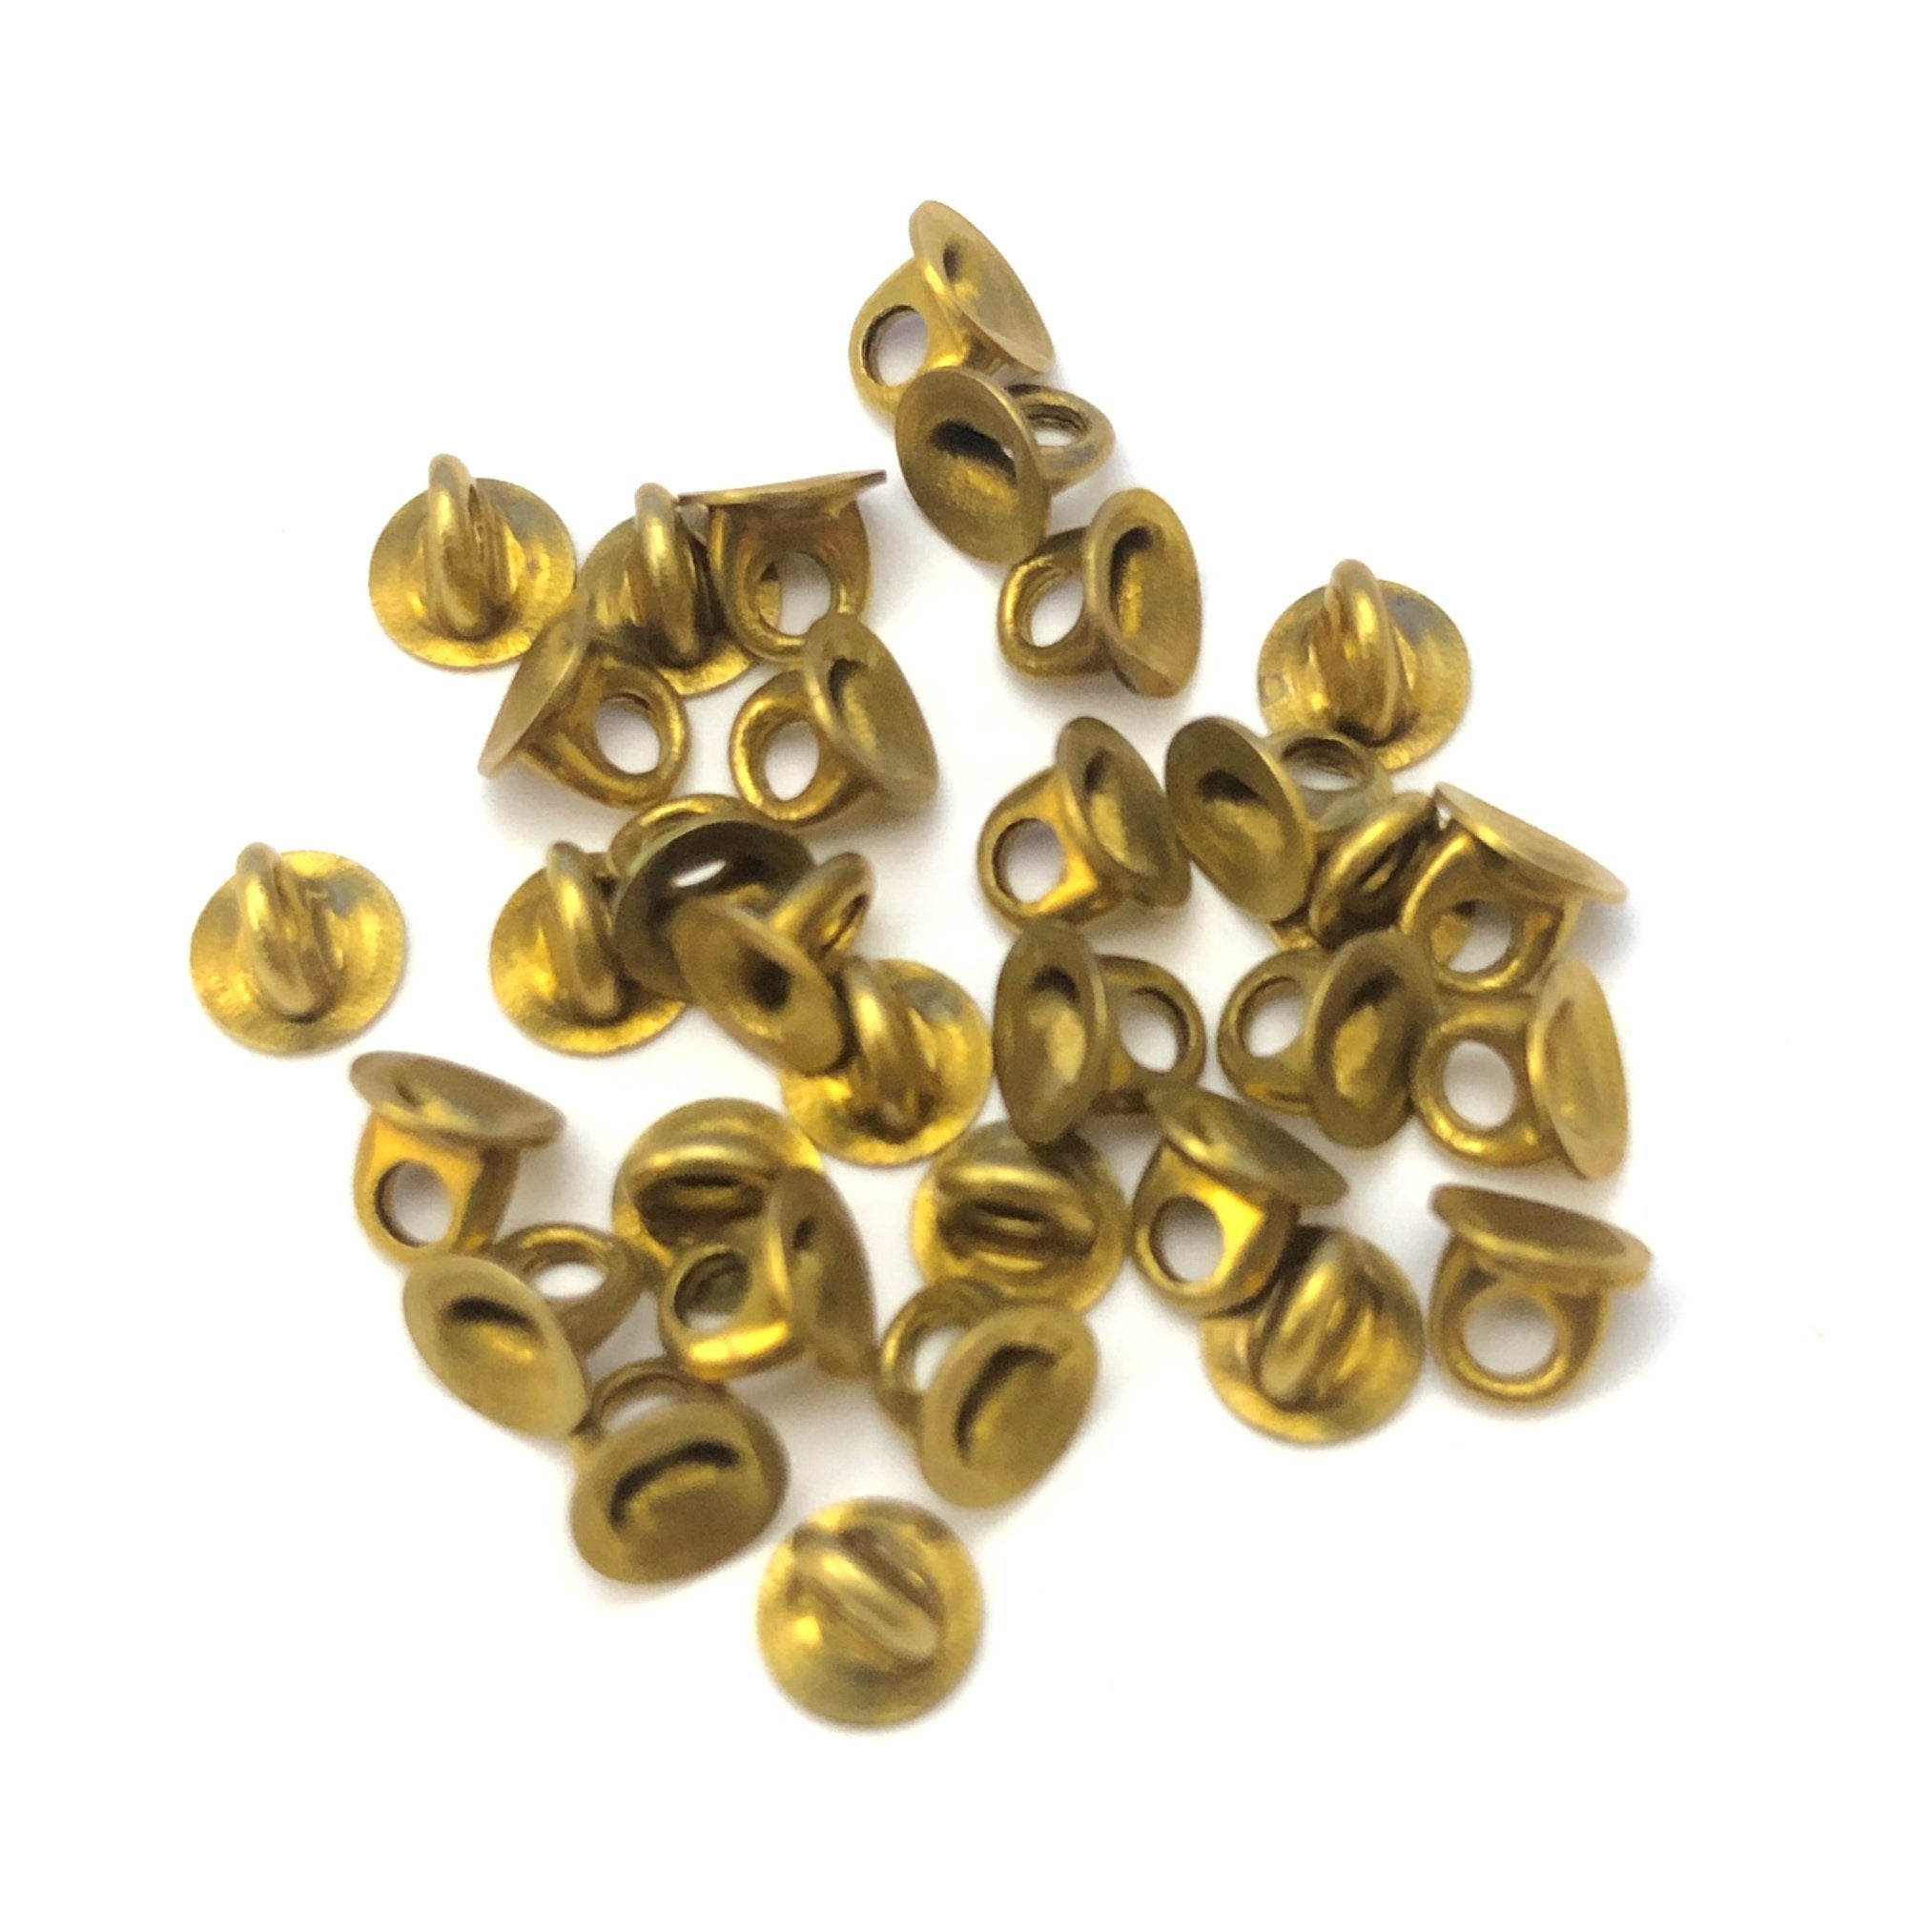 Round Raw Brass Beads - 4mm - 100 pieces